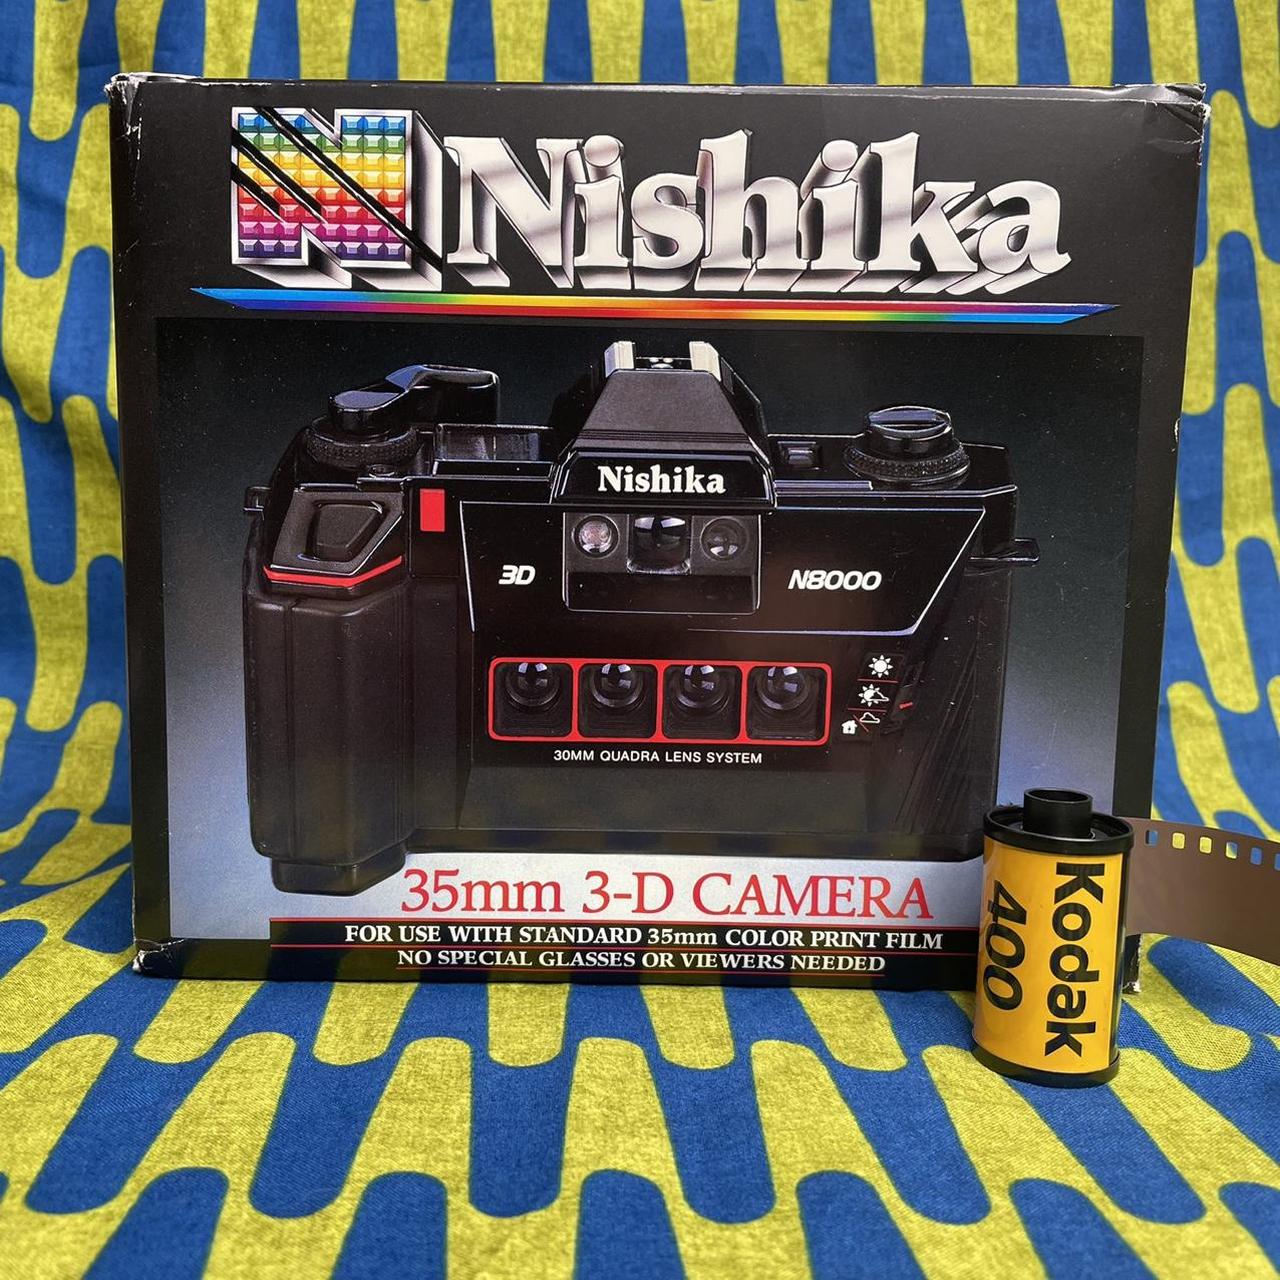 Product Image 1 - Nishika N8000! Film tested! Comes